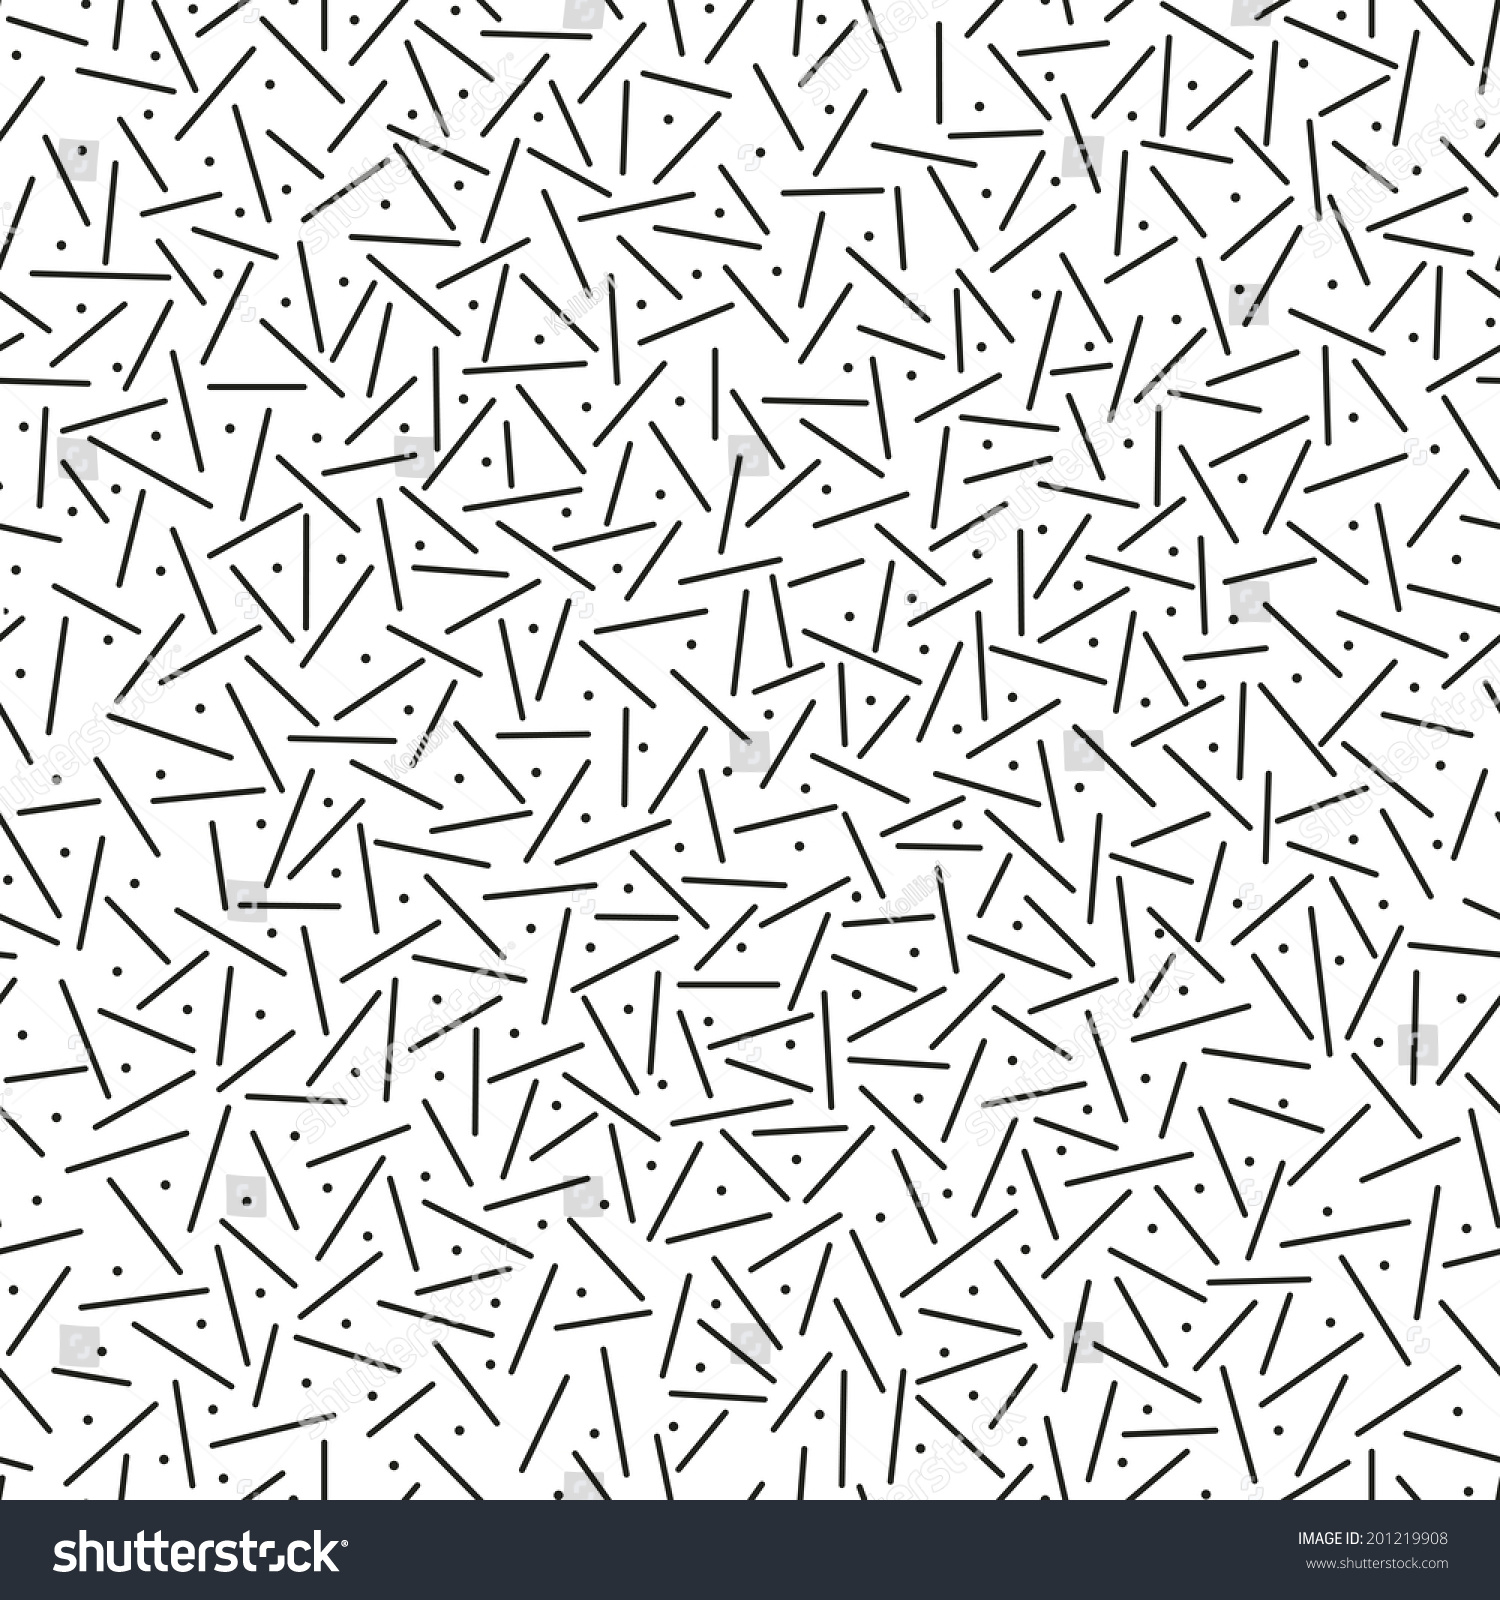 Cute Lines Polka Dots Texture Black Stock Vector 201219908 - Shutterstock